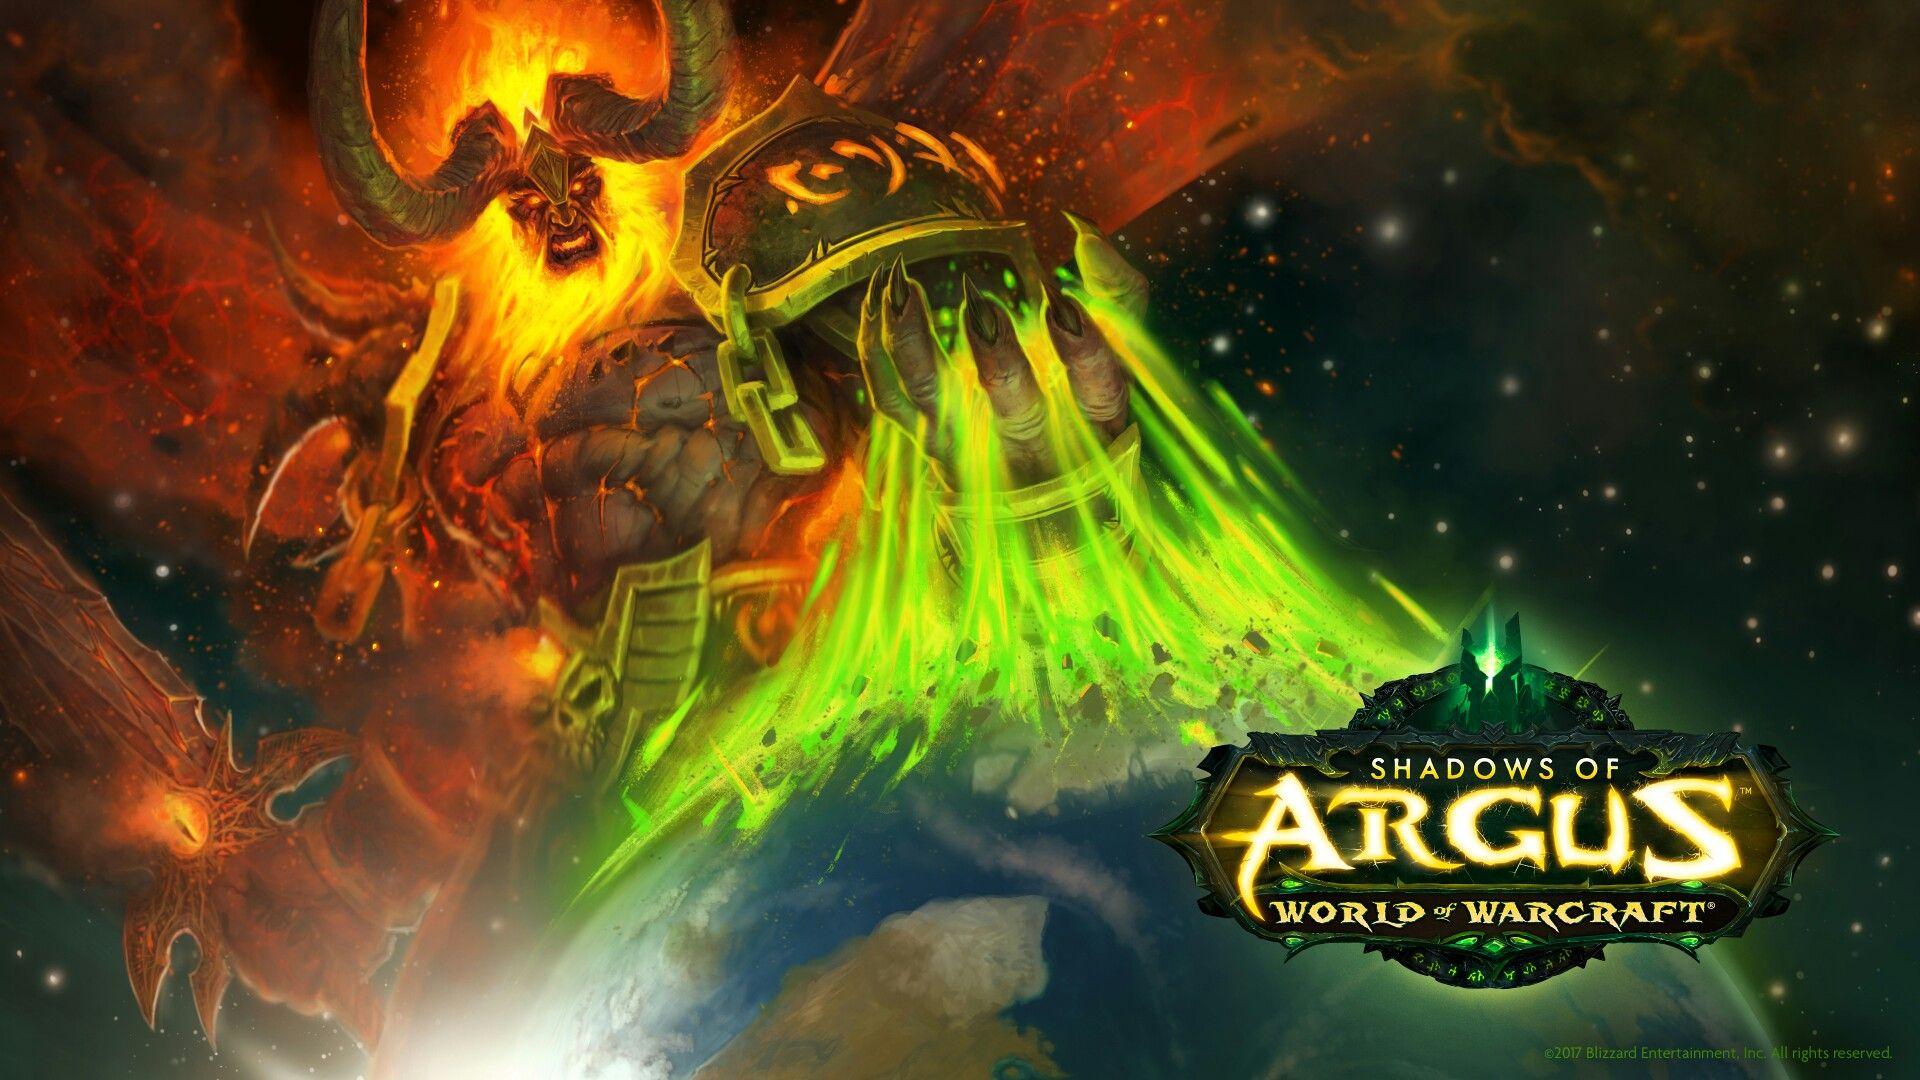 Shadow of Argus Patch 7.3 Wallpaper. burning legion. Warcraft art